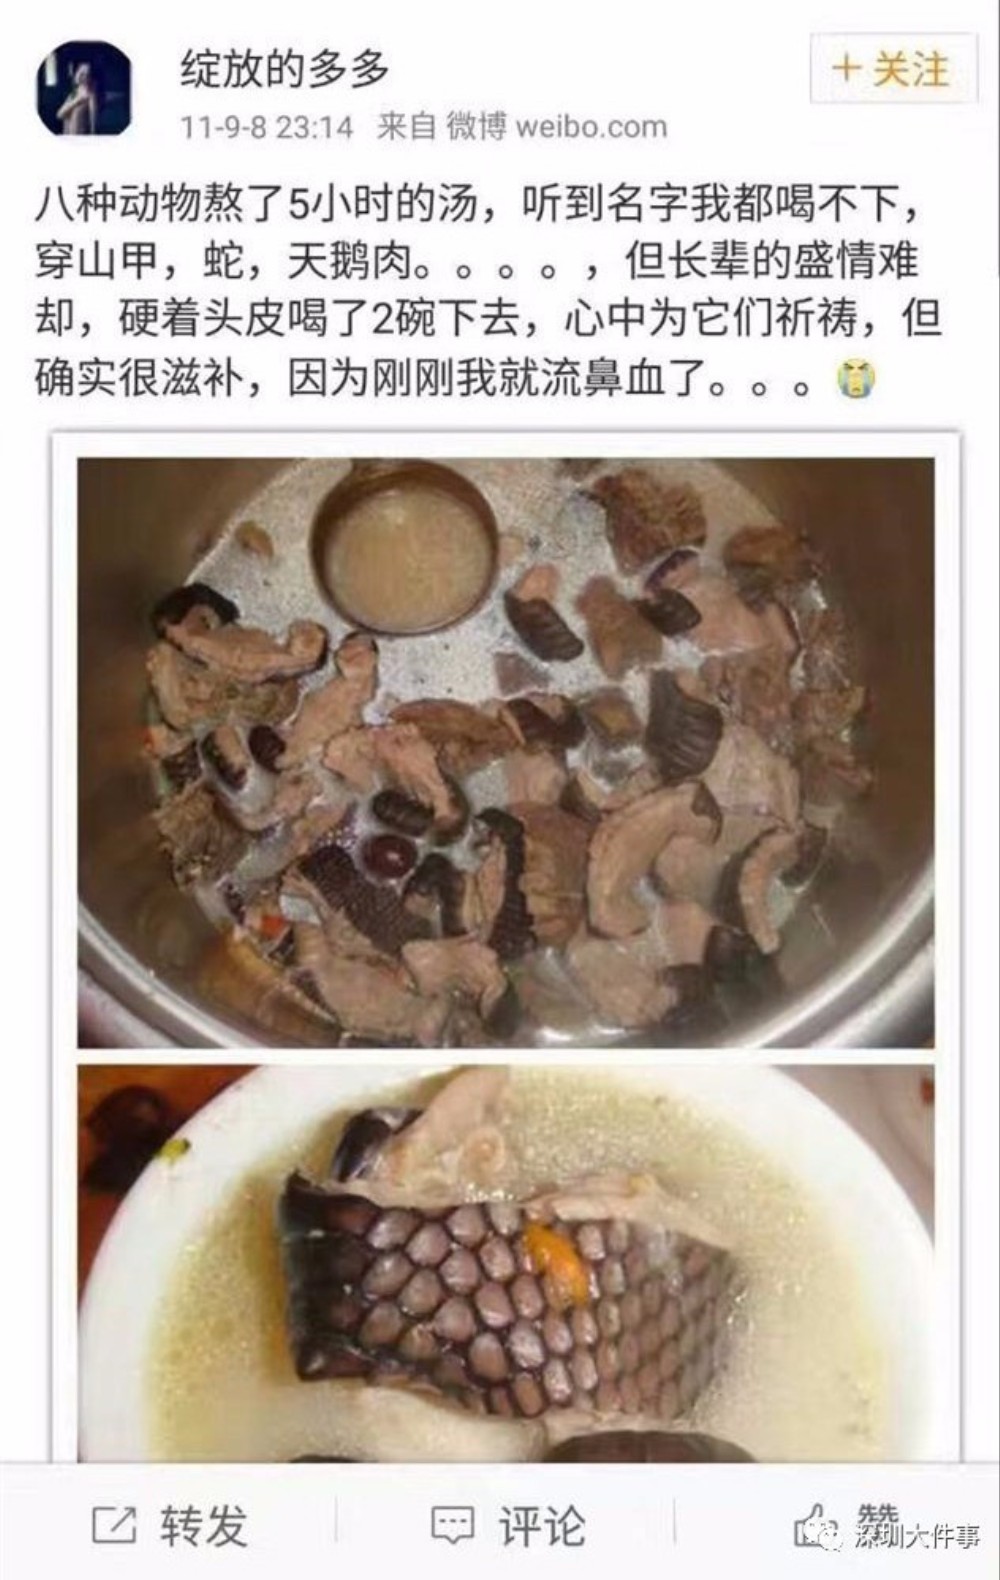 pangolin-princess-stew-weibo